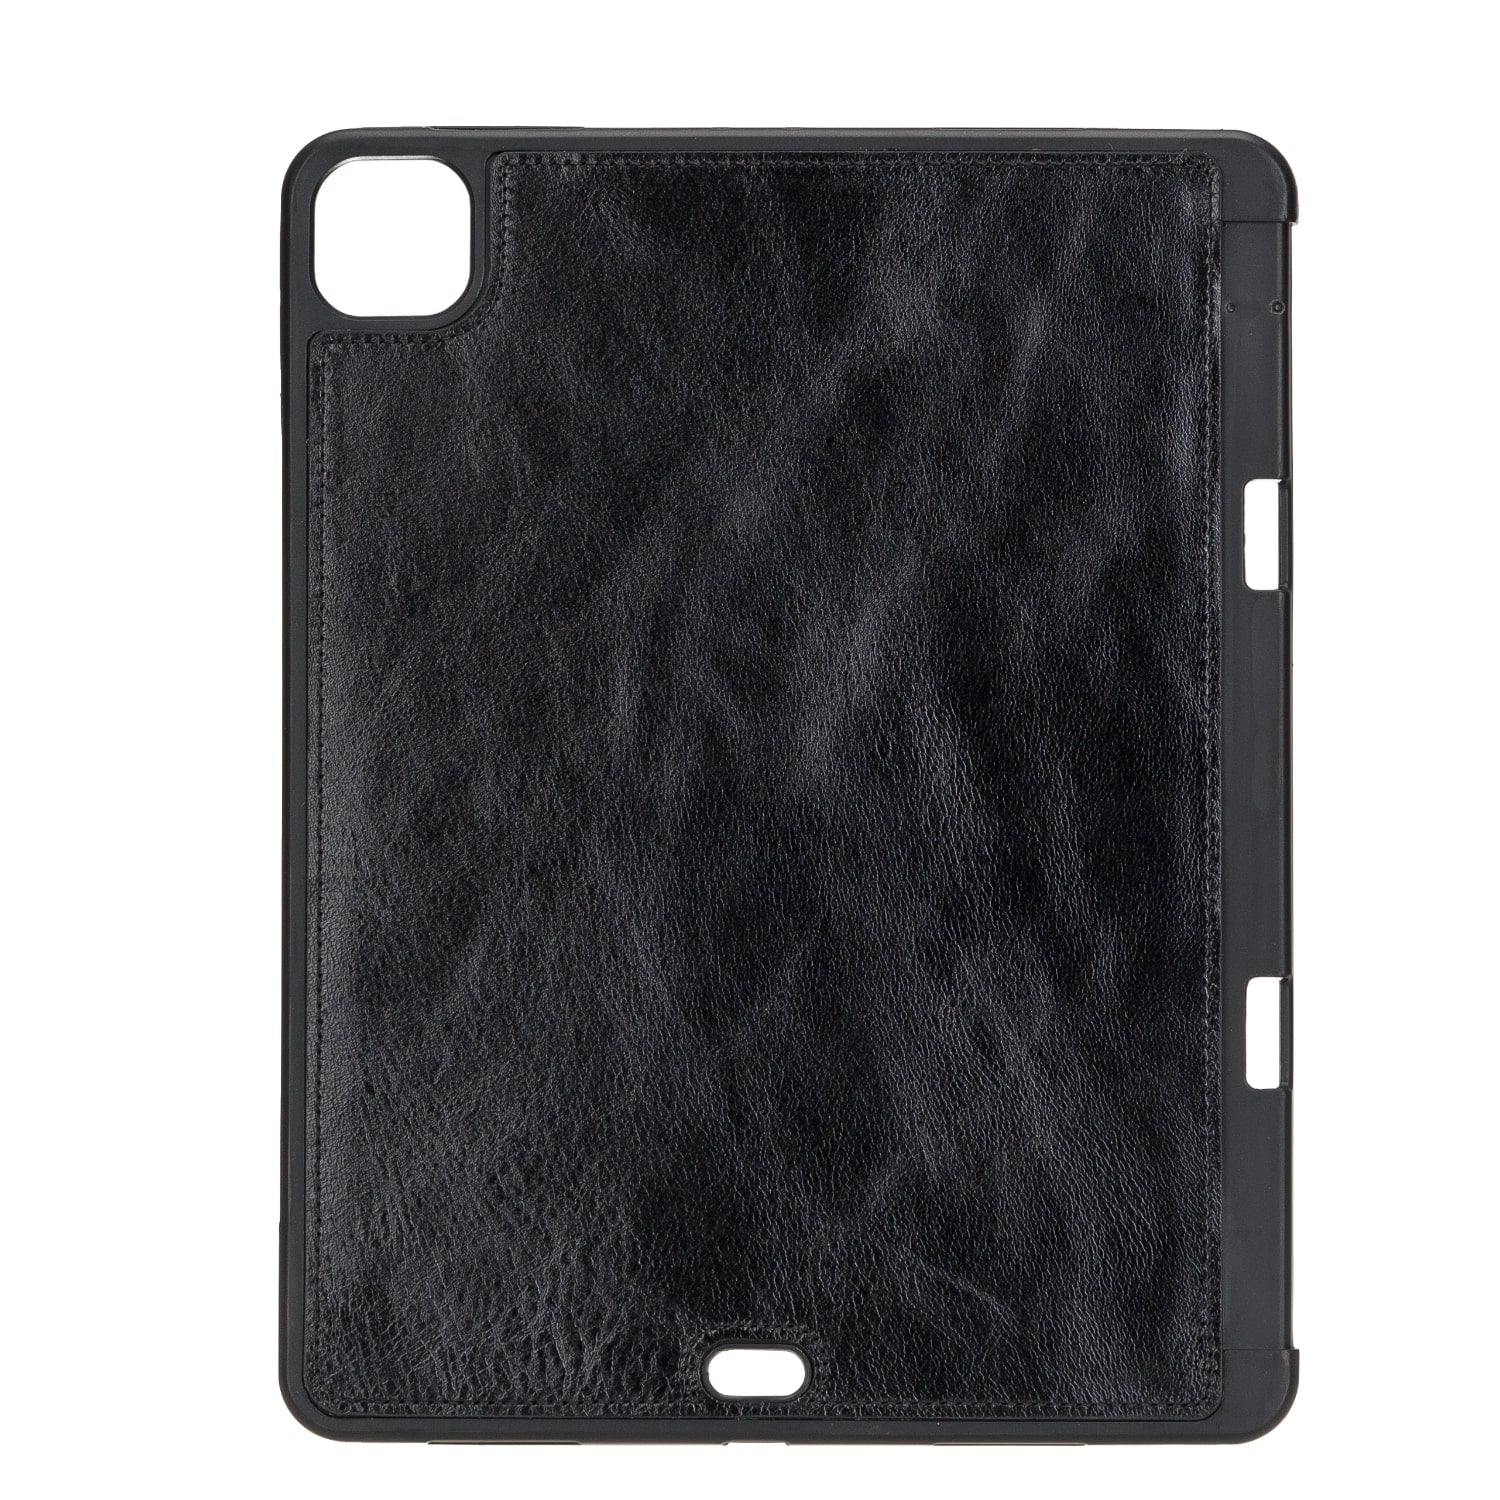 Black Leather iPad Pro 11 Inc Smart Folio Case with Apple Pen Holder - Bomonti - 5